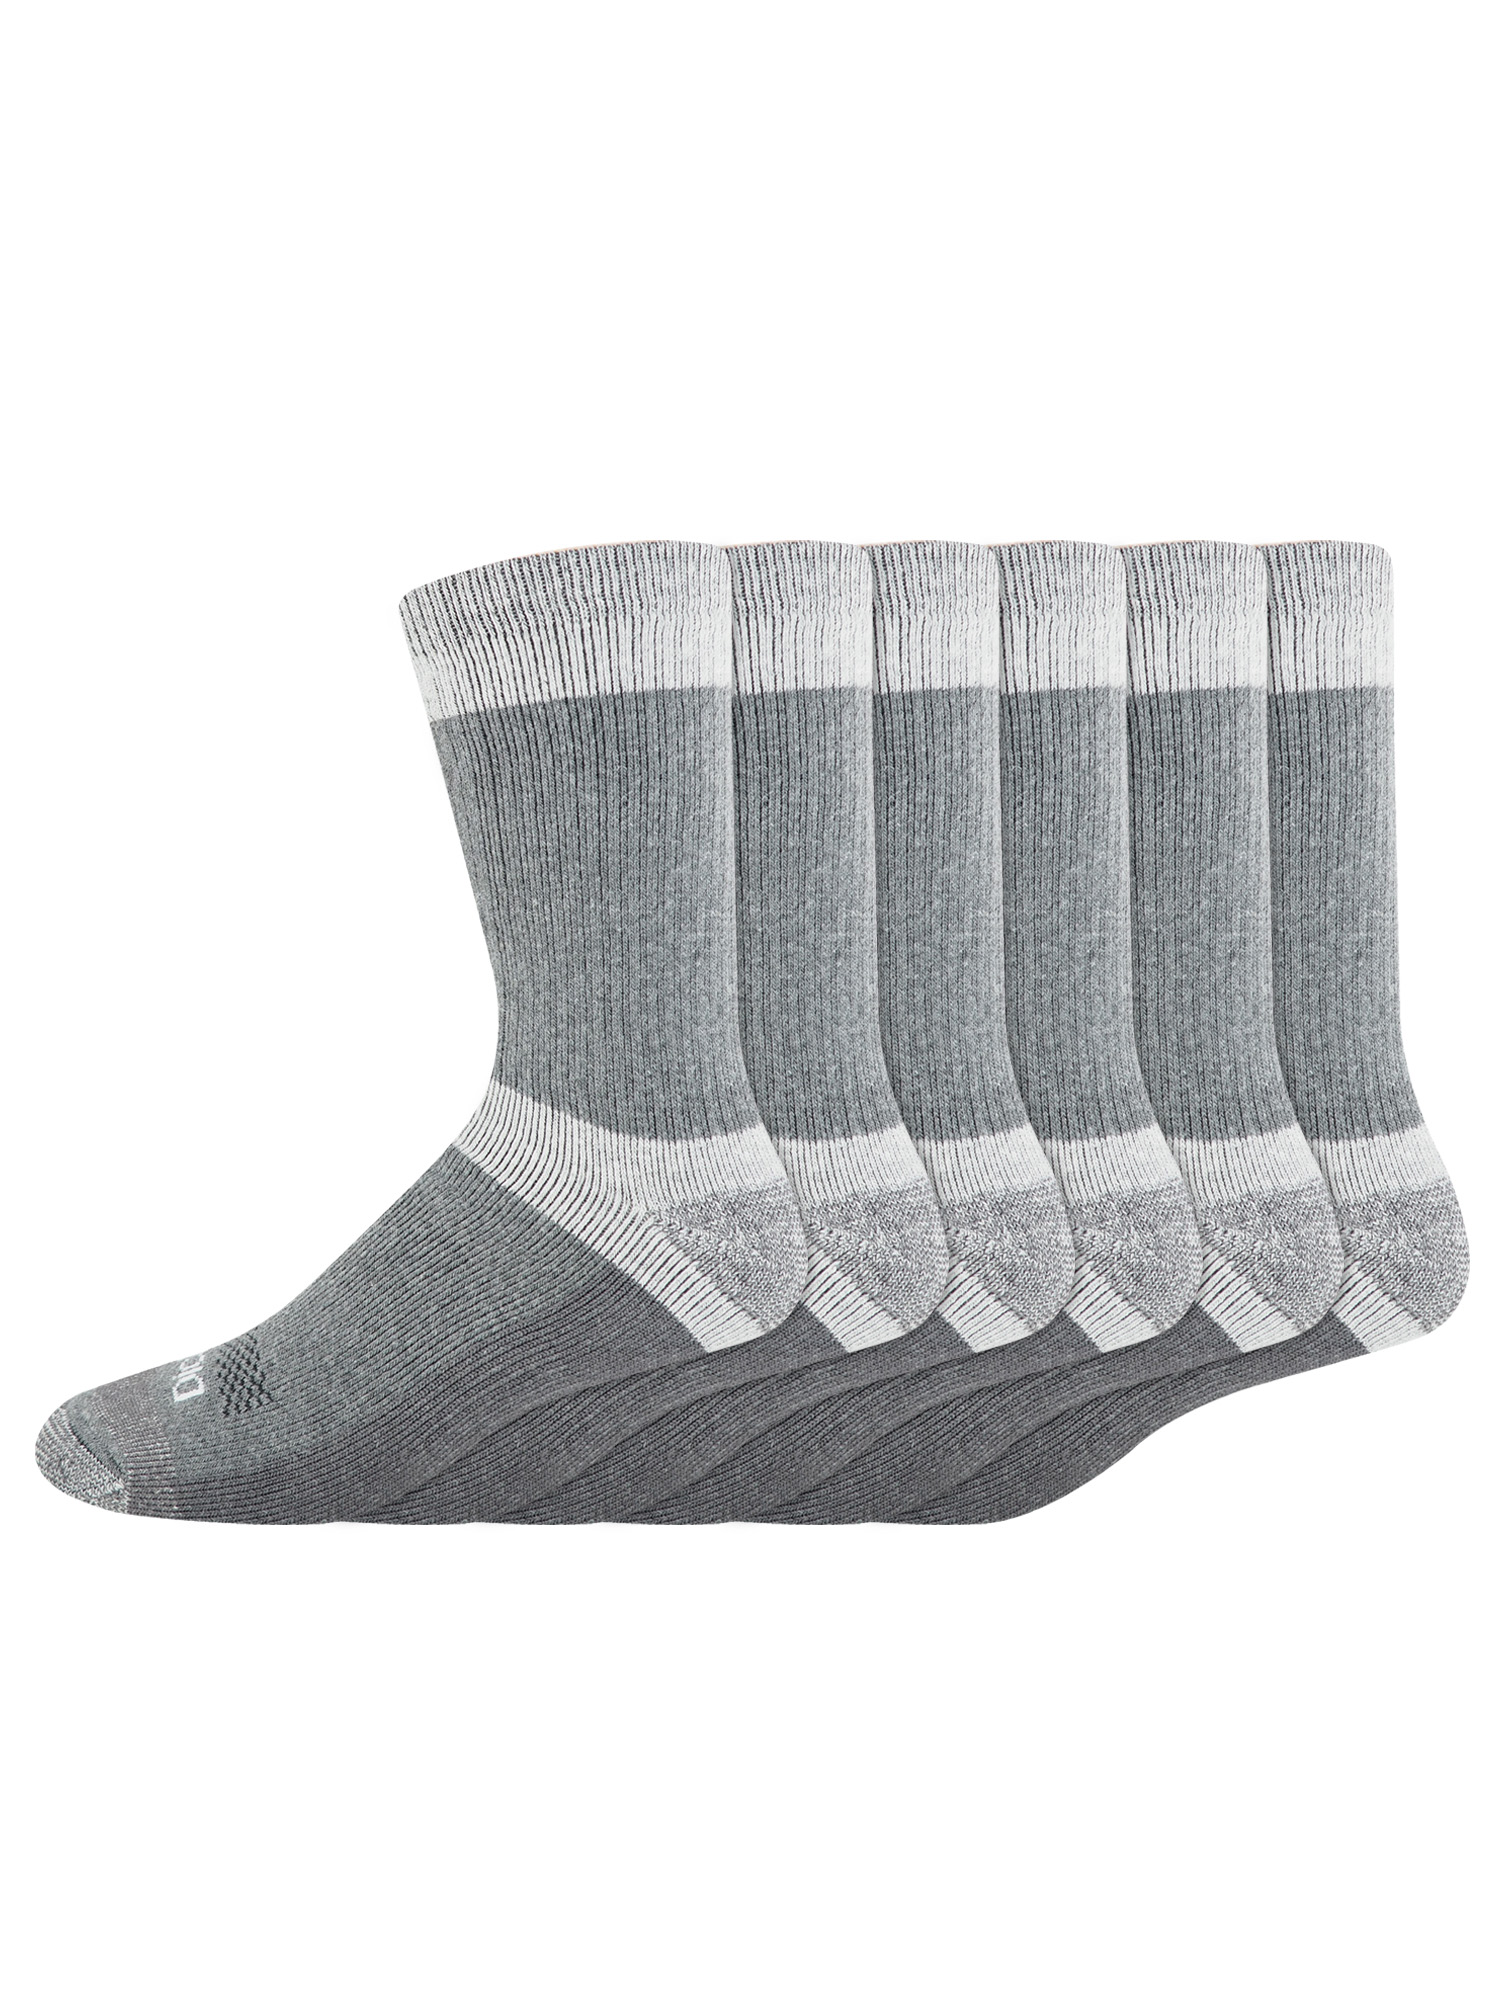 Dickies Men's Max Cushion Crew Sock, 6 Pack, Shoe Size 6-12 - image 1 of 3